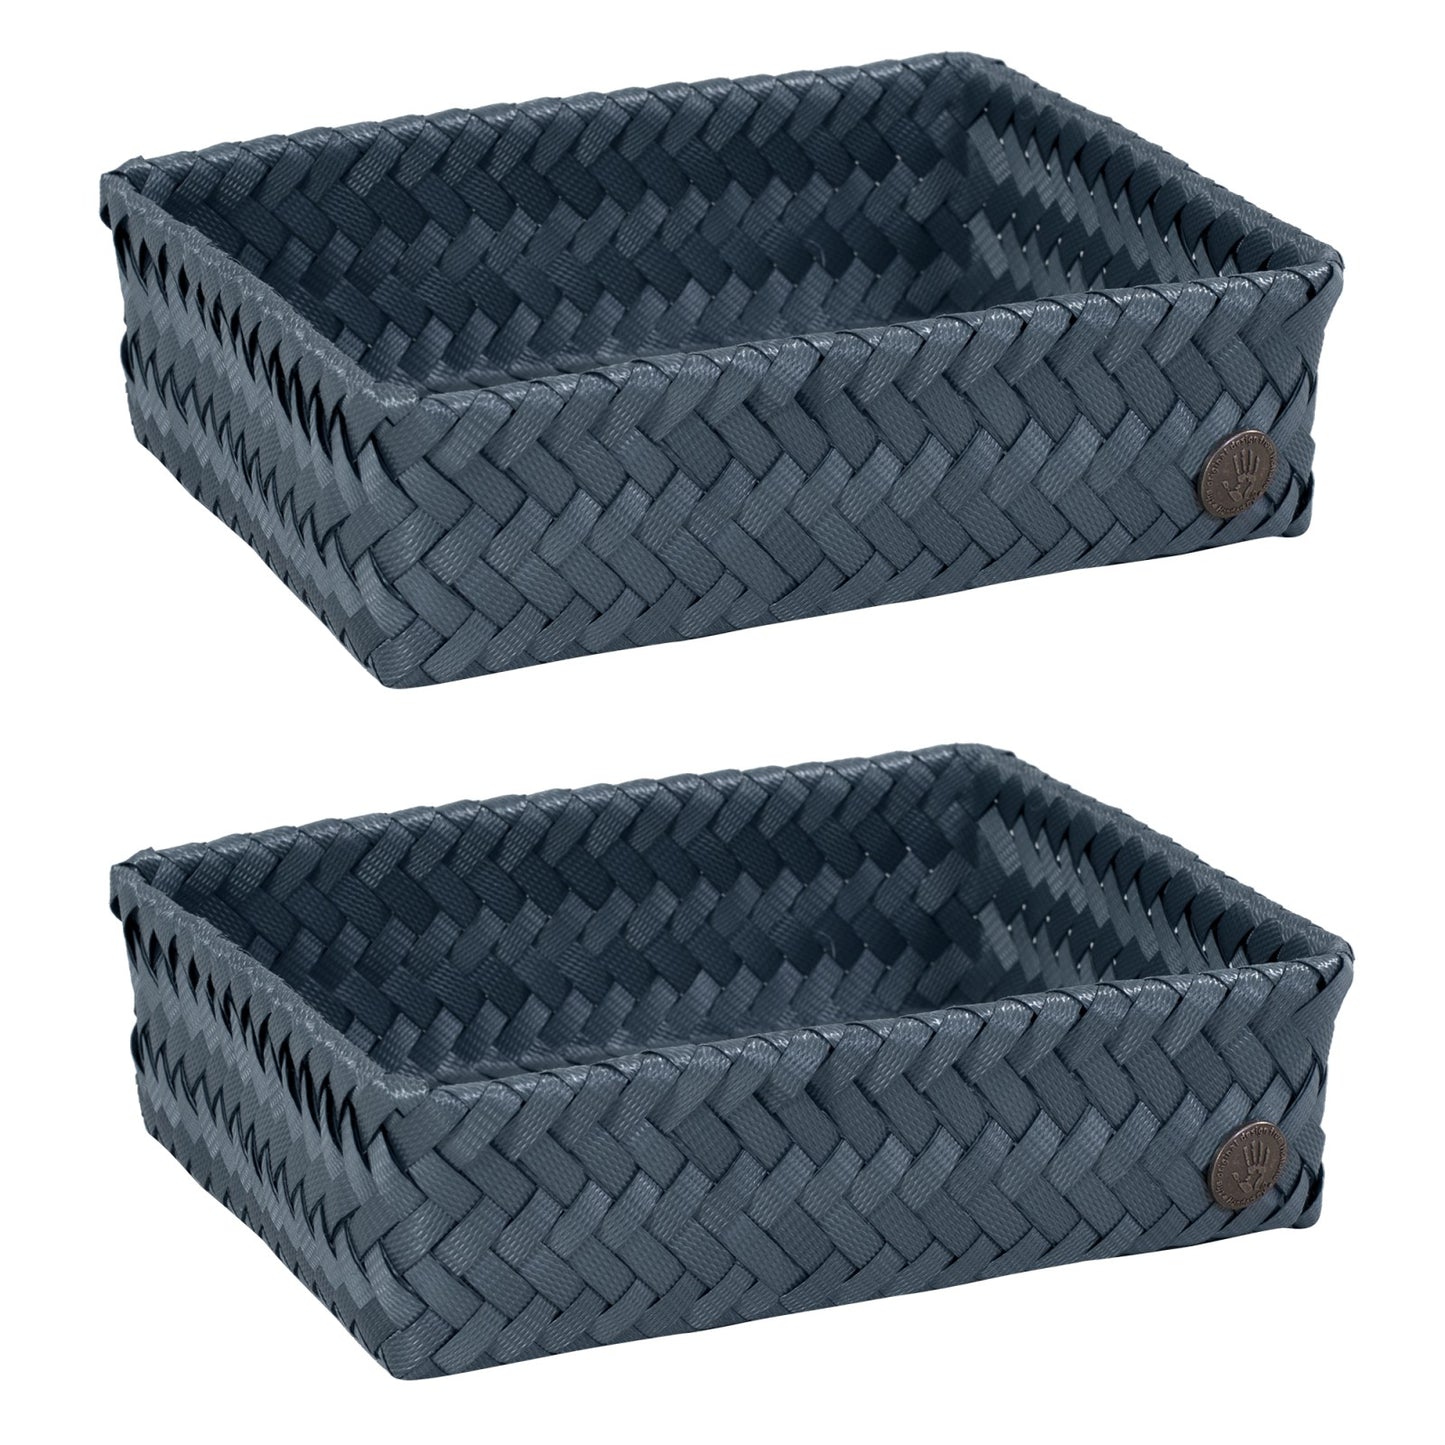 Fit Medium - Open basket rectangular